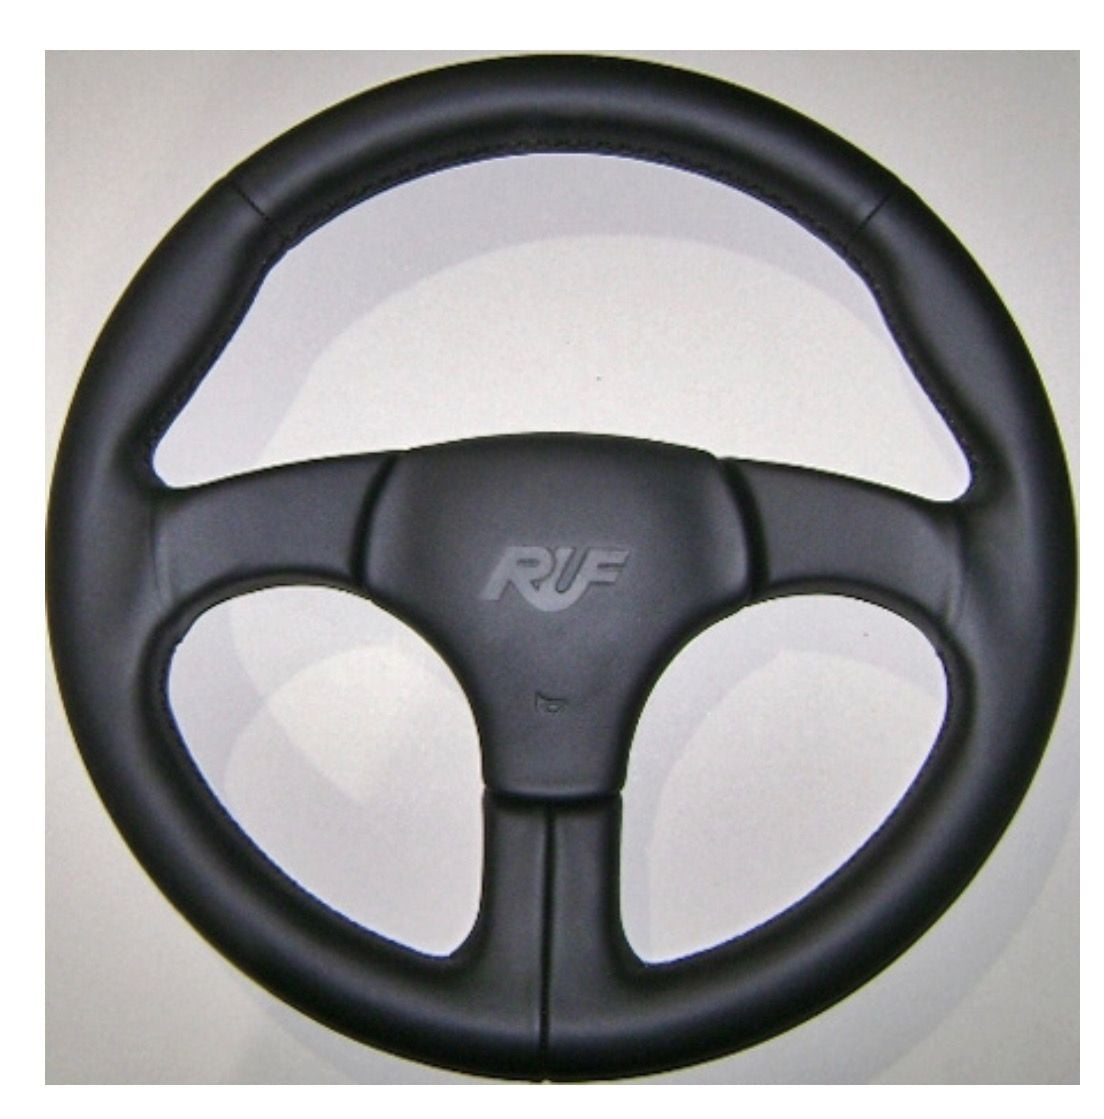 Interior/Upholstery - RUF Steering wheel - New - Doral, FL 33166, United States